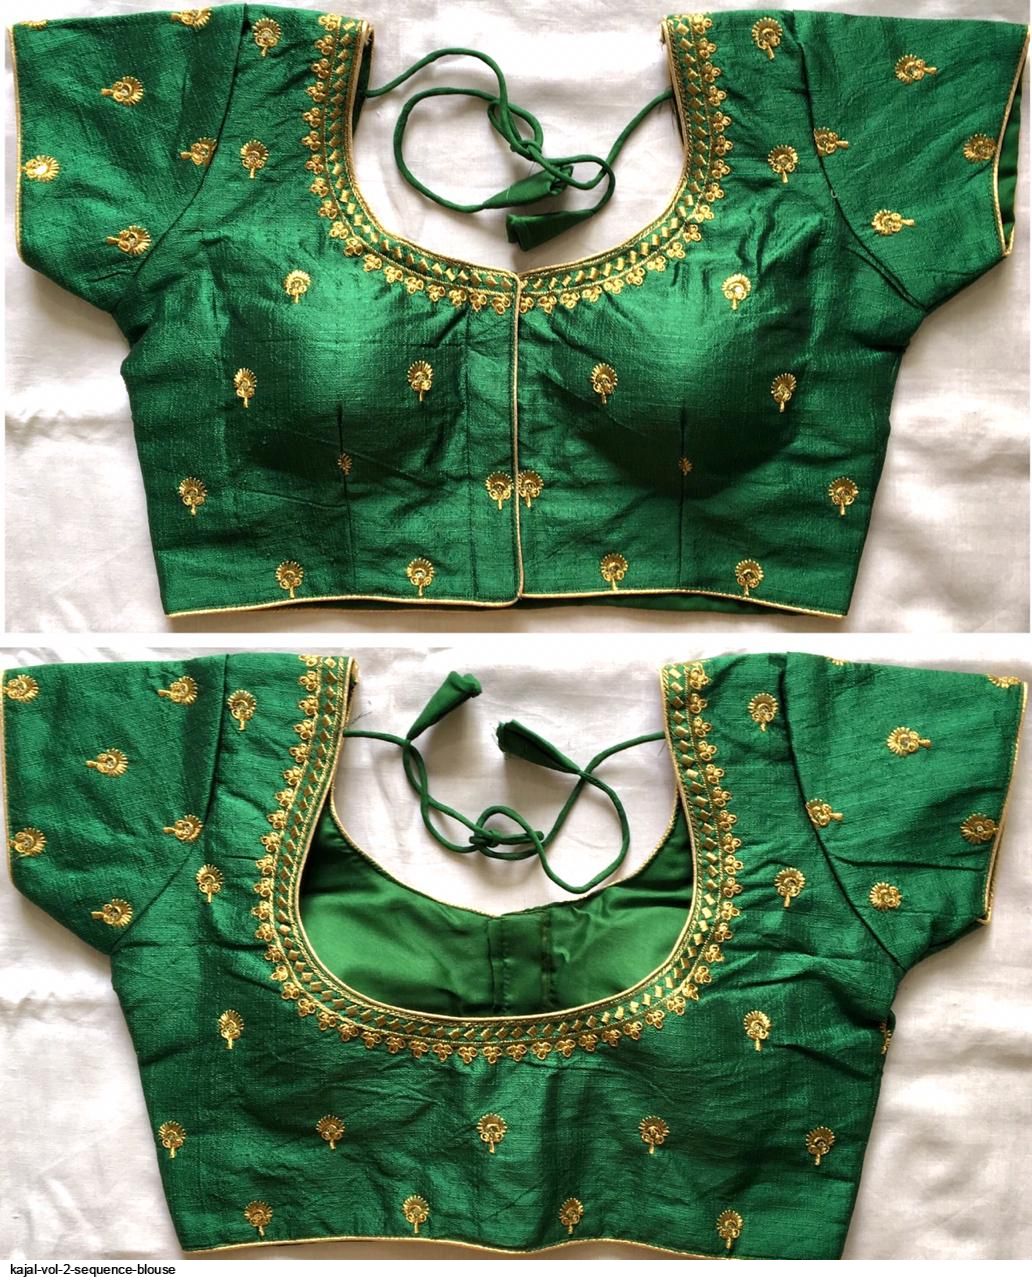 blouse cutting Images • kajol boutique (@palaksilaicentre) on ShareChat